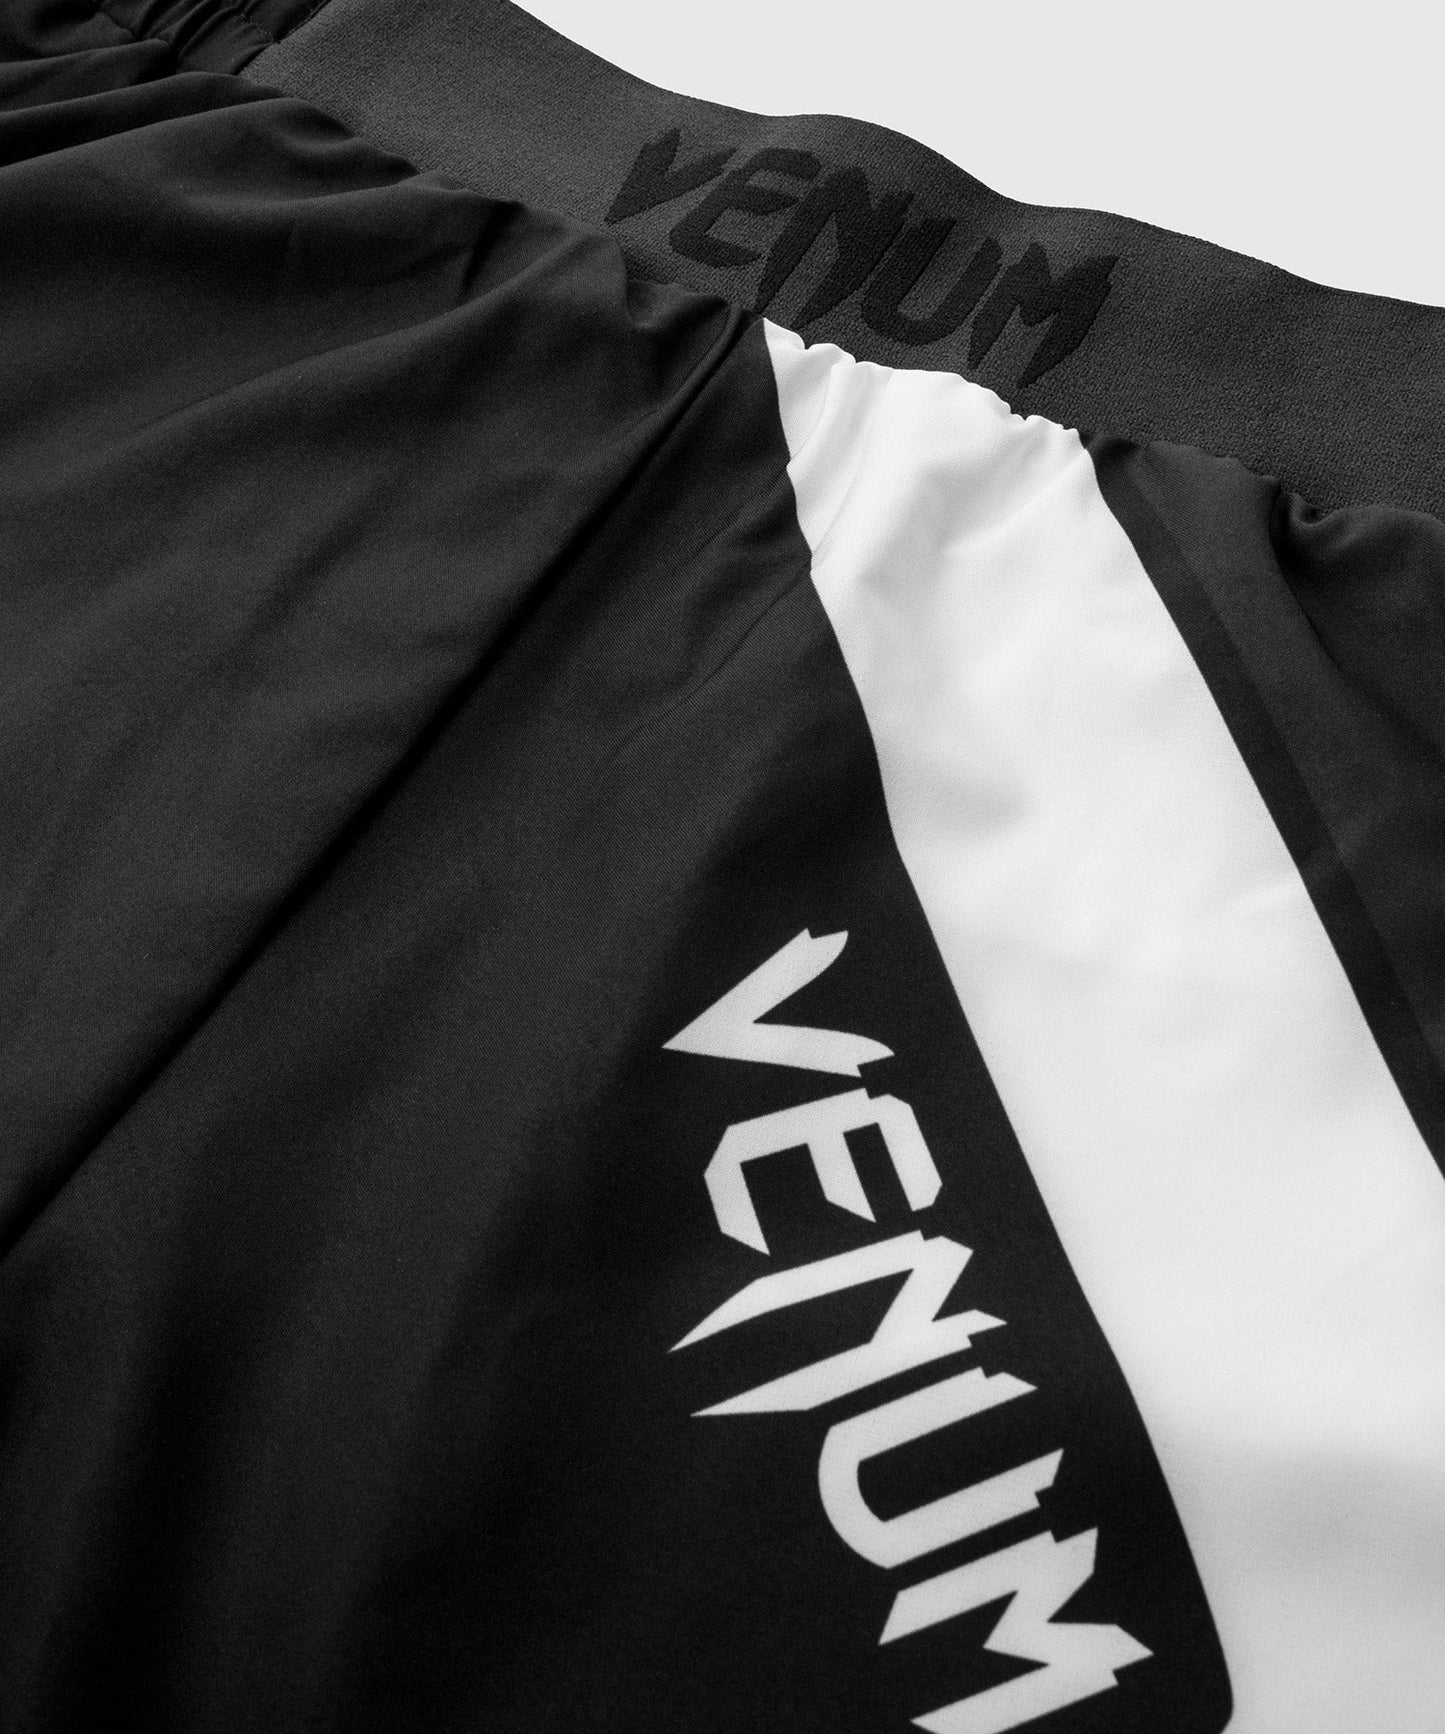 Venum Contender 4.0 Training Shorts - Black/Grey-White